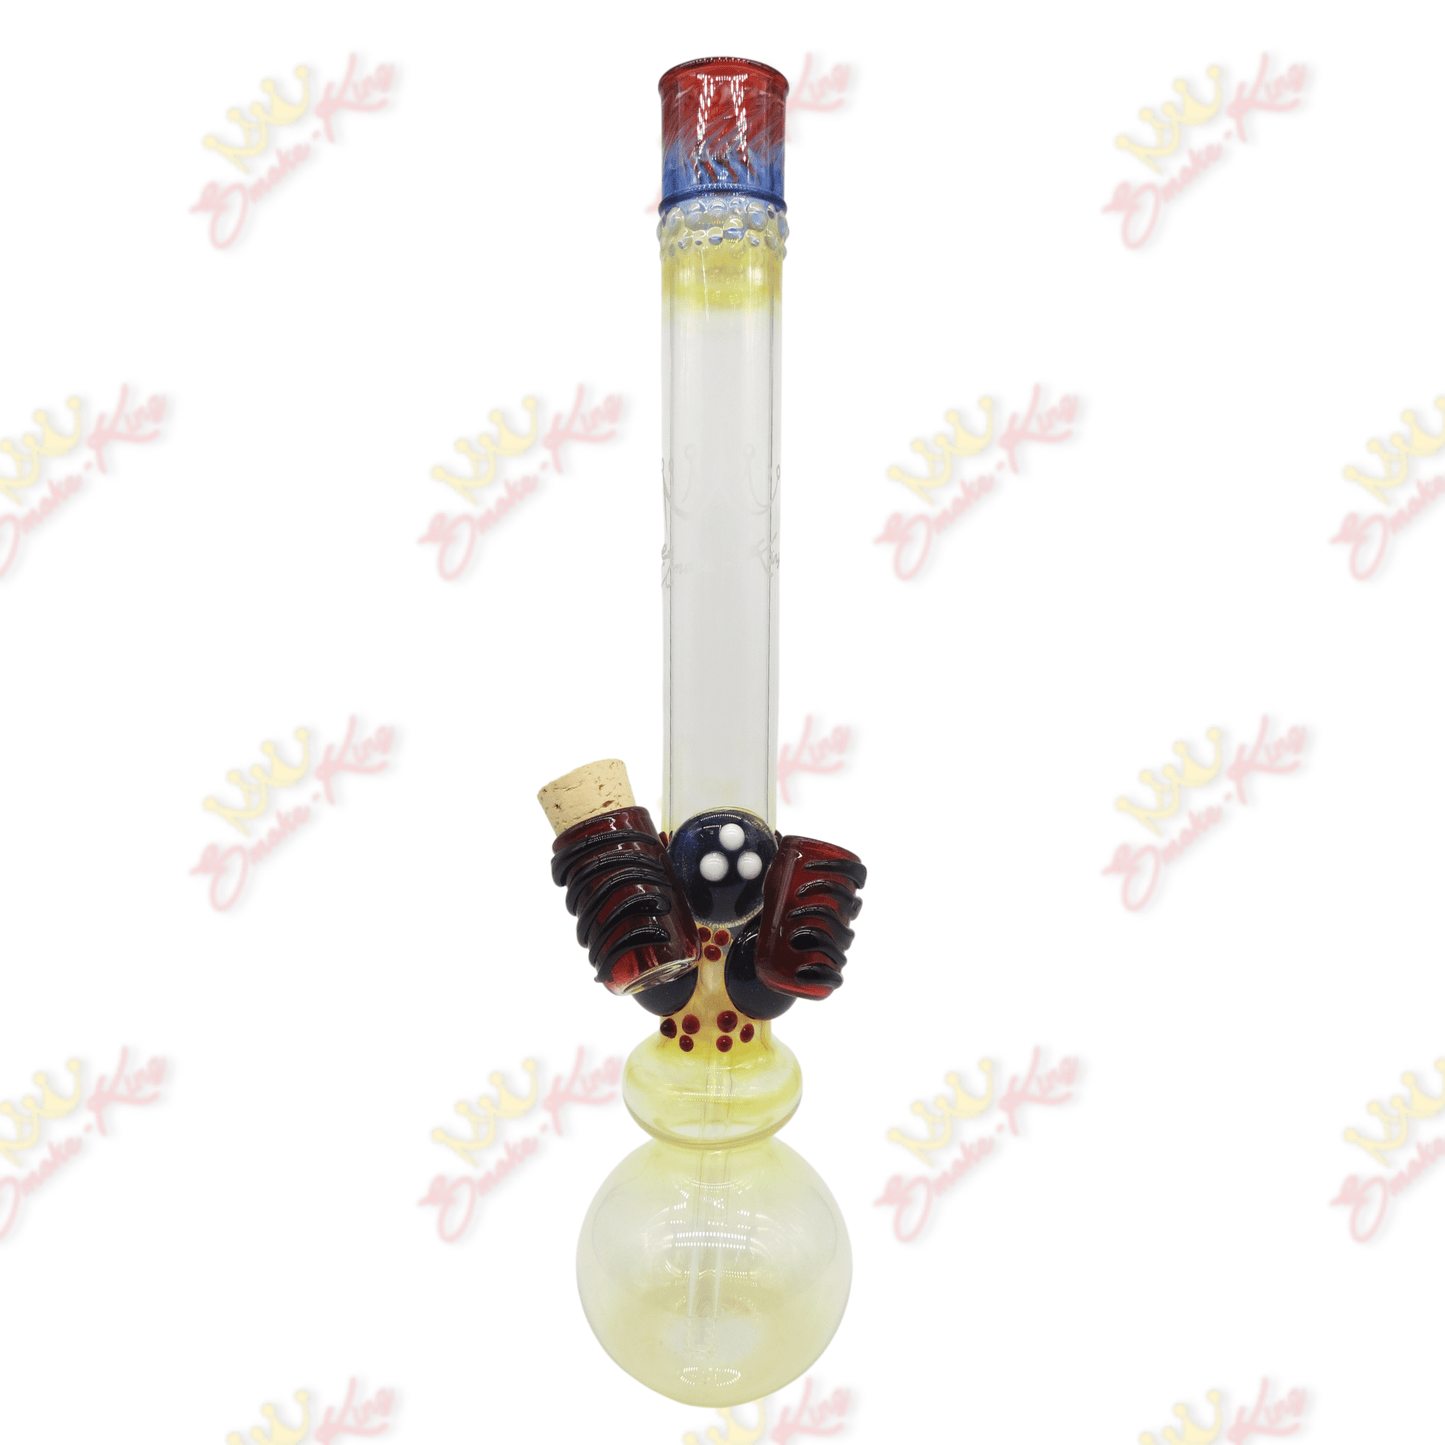 Bong w/ red stash and lighter jar - Smoke King